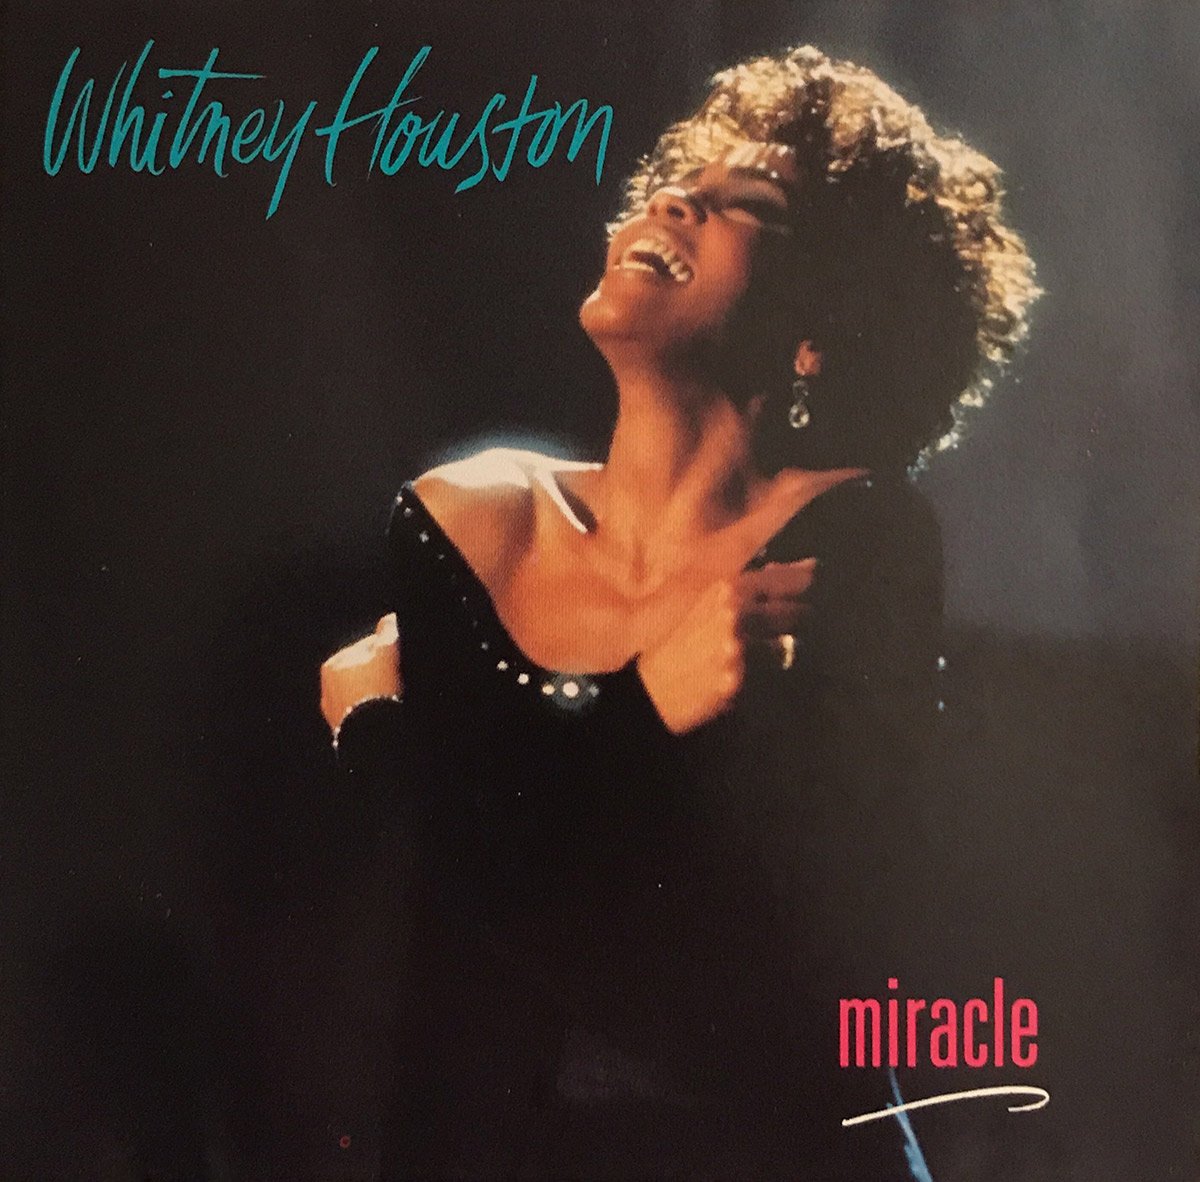 Whitney Houston Miracle cover artwork